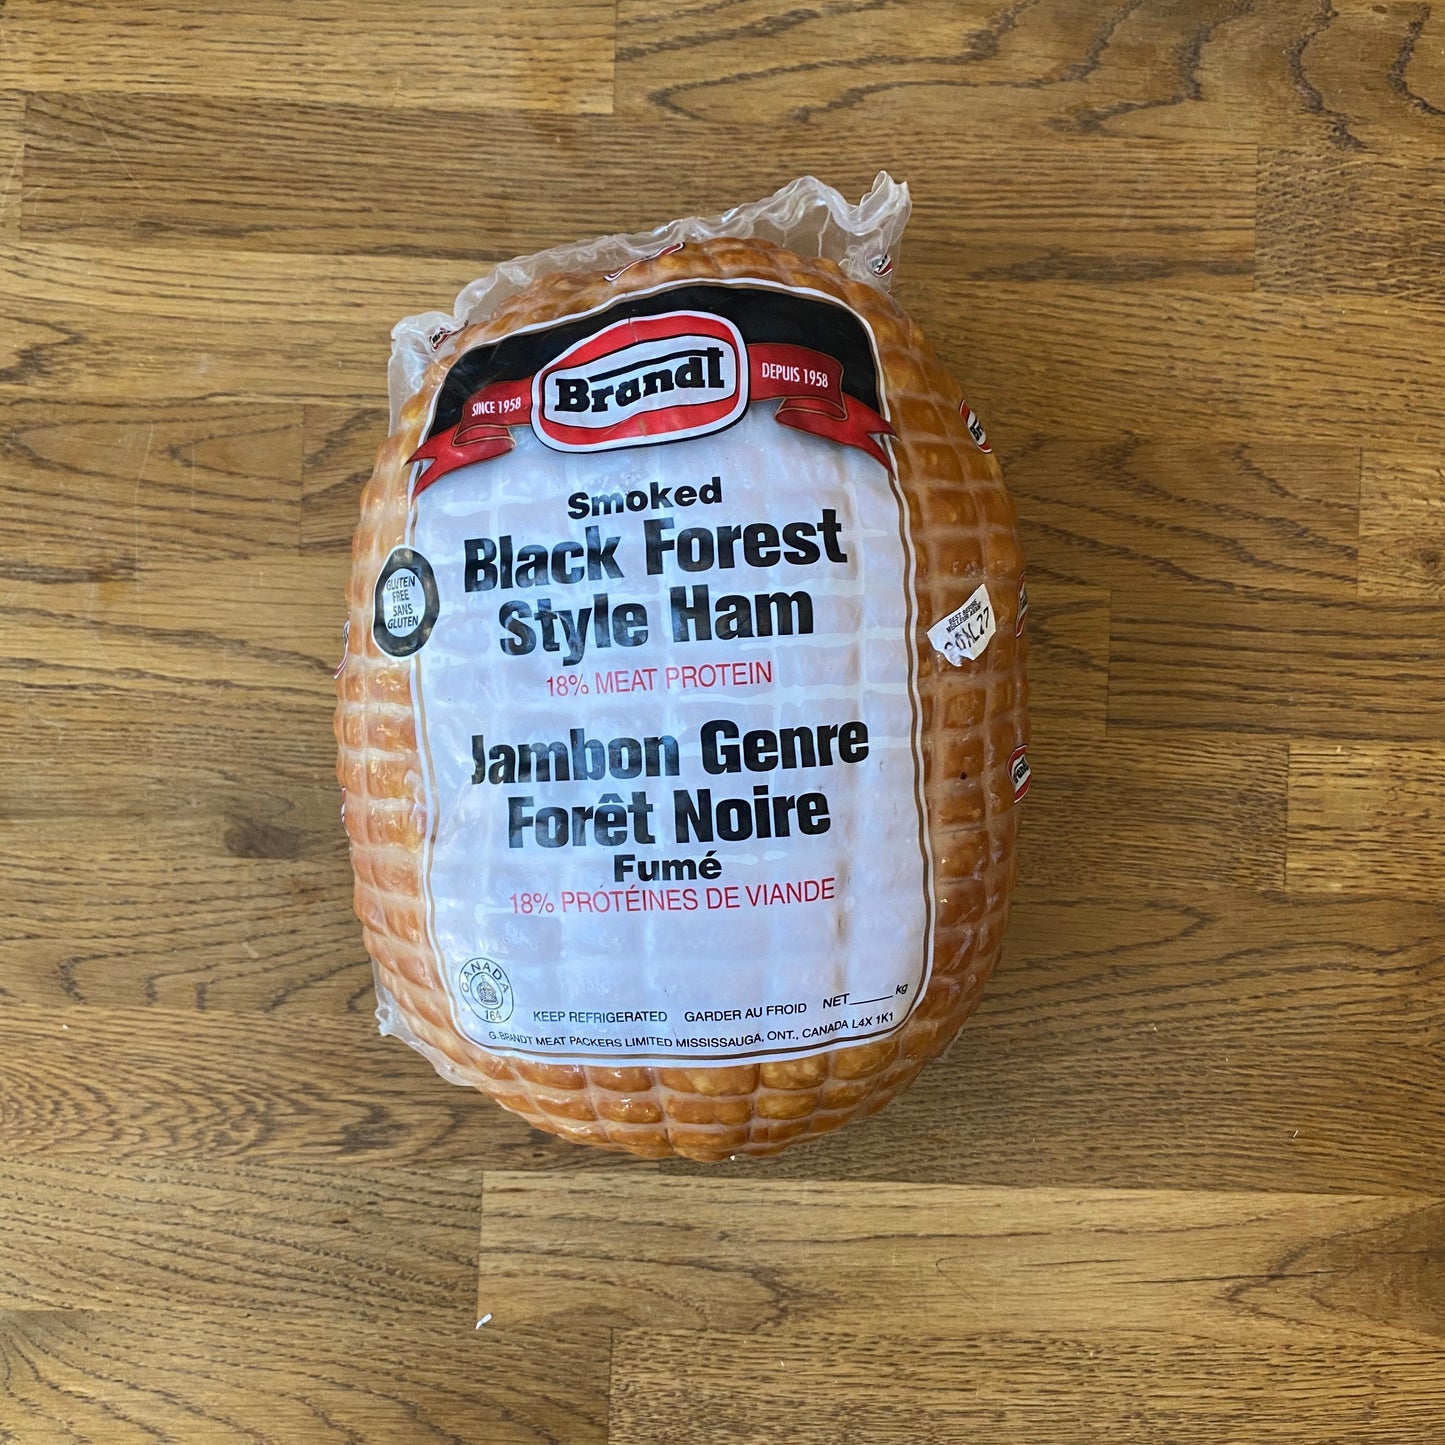 Black Forest Ham - Per 100g